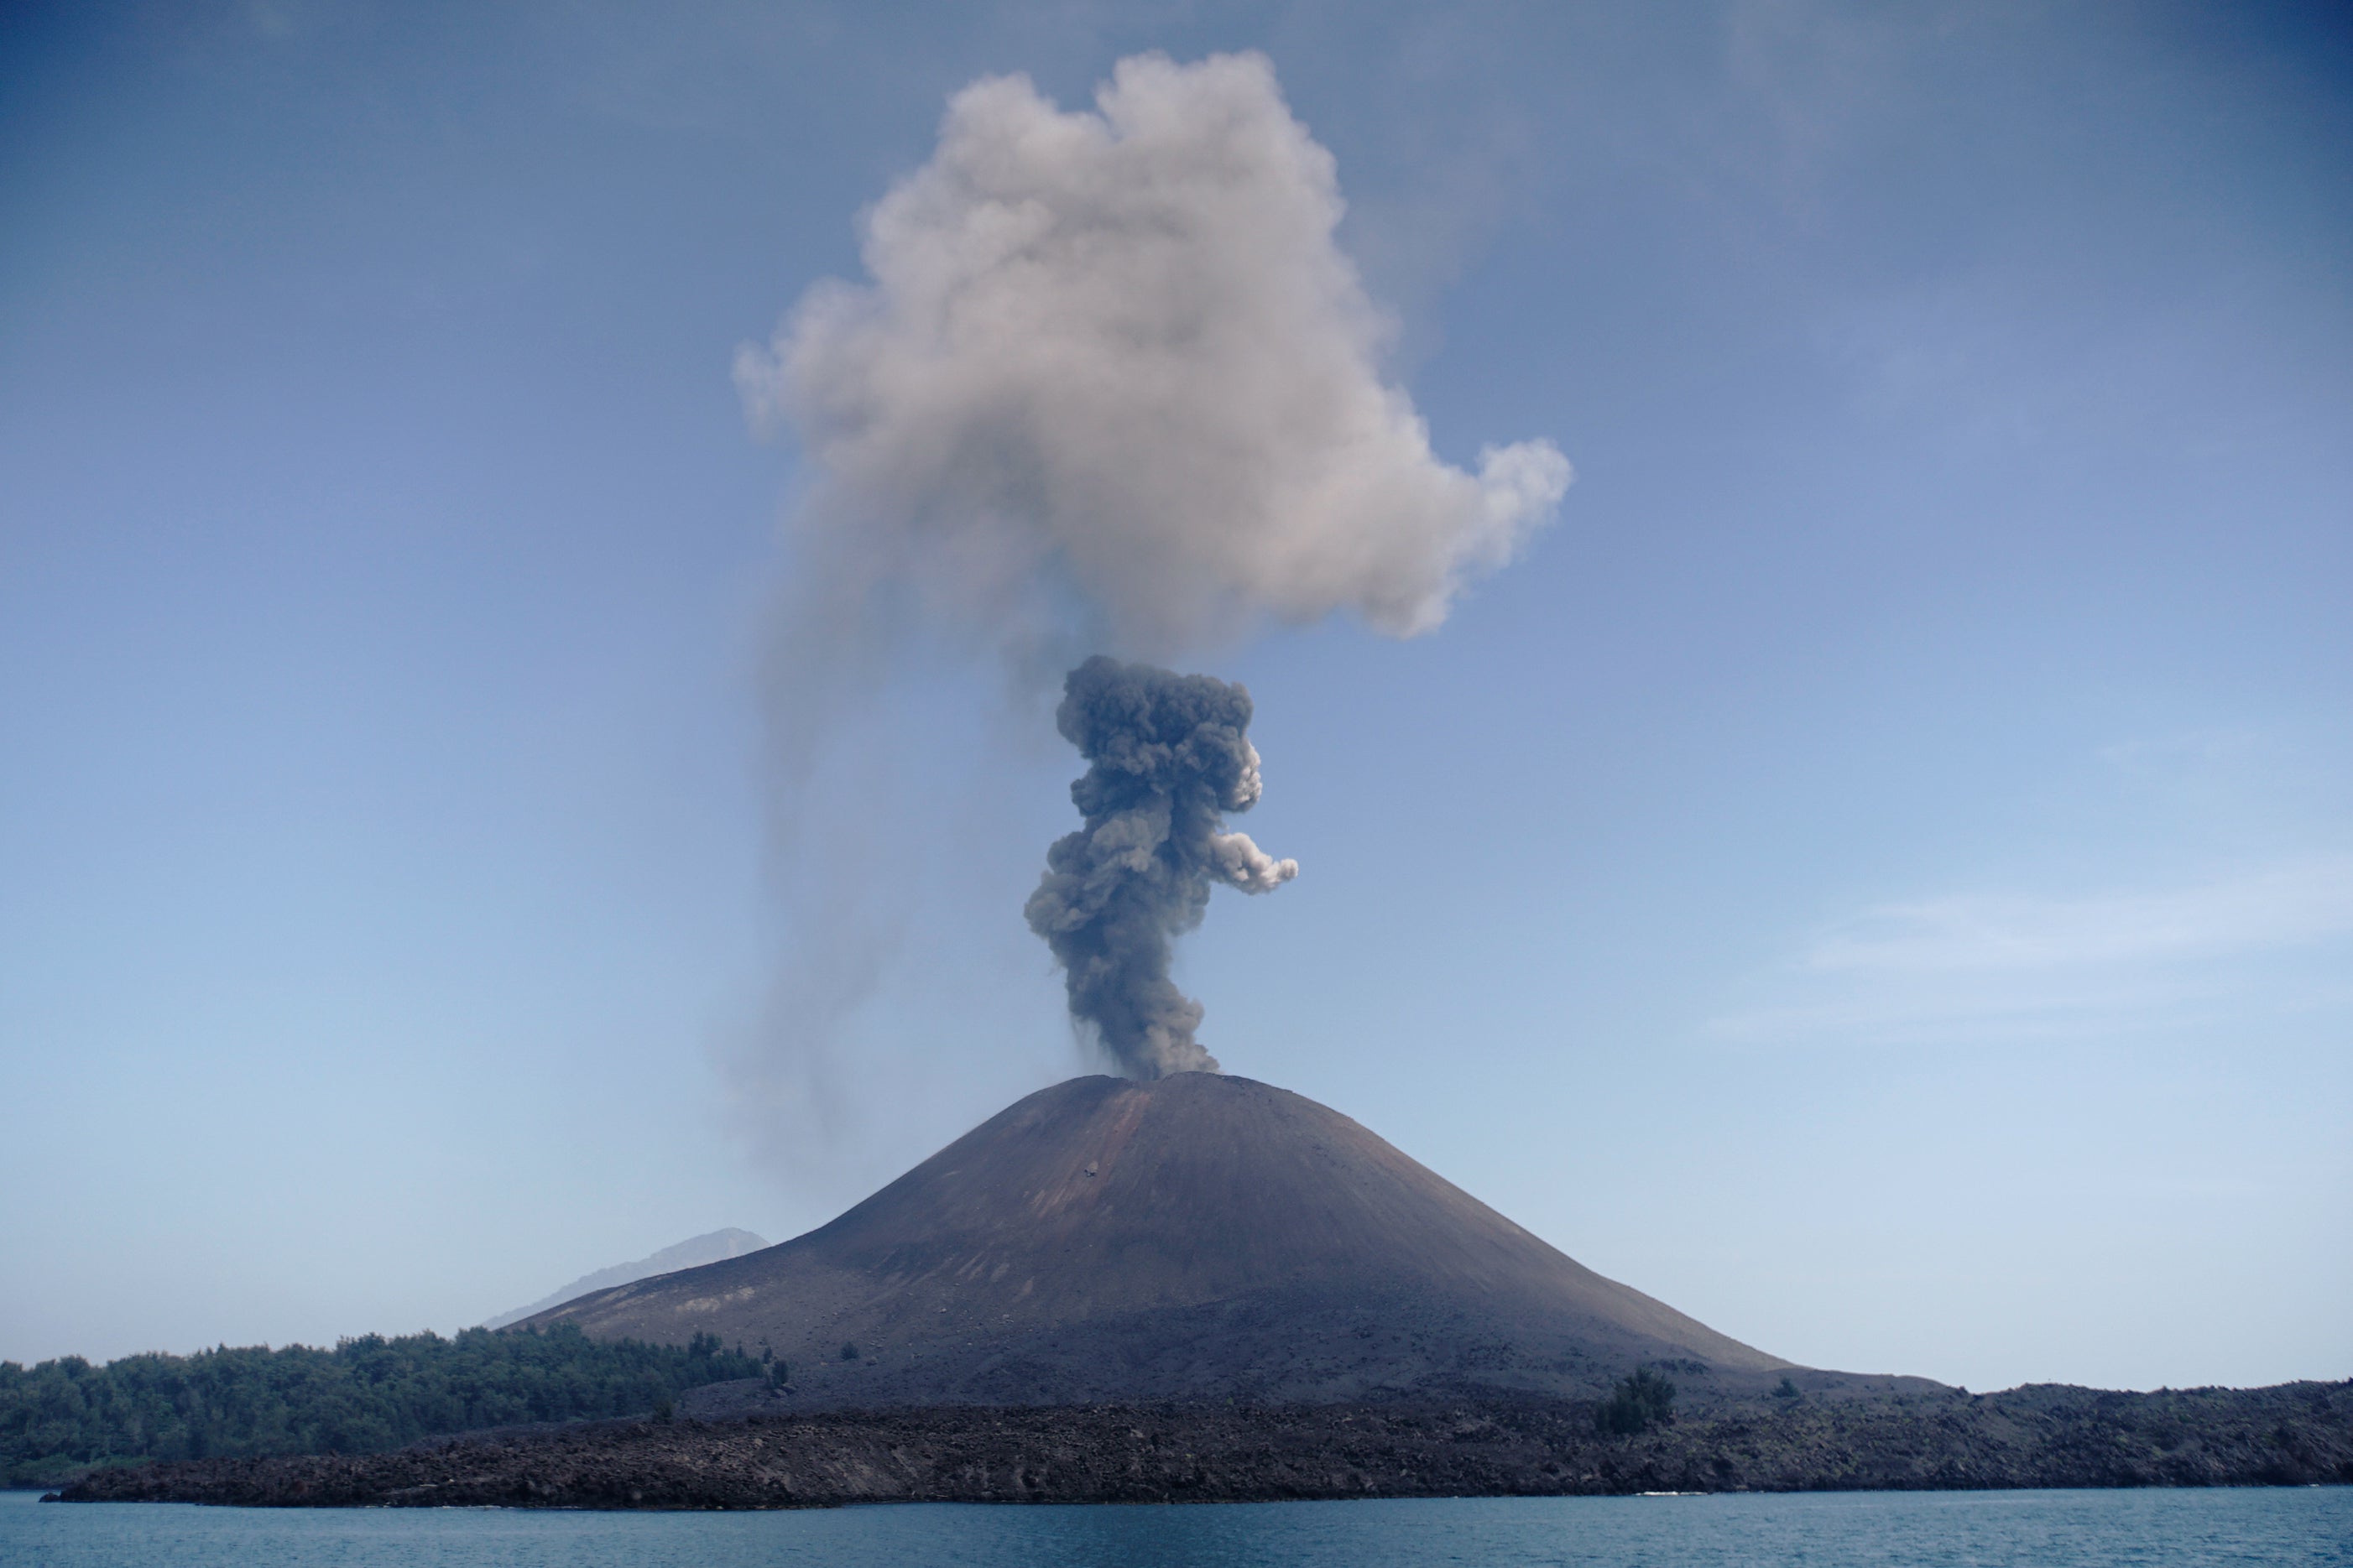 Anak Krakatau island erupted on 22 December 2018 triggering a deadly tsunami